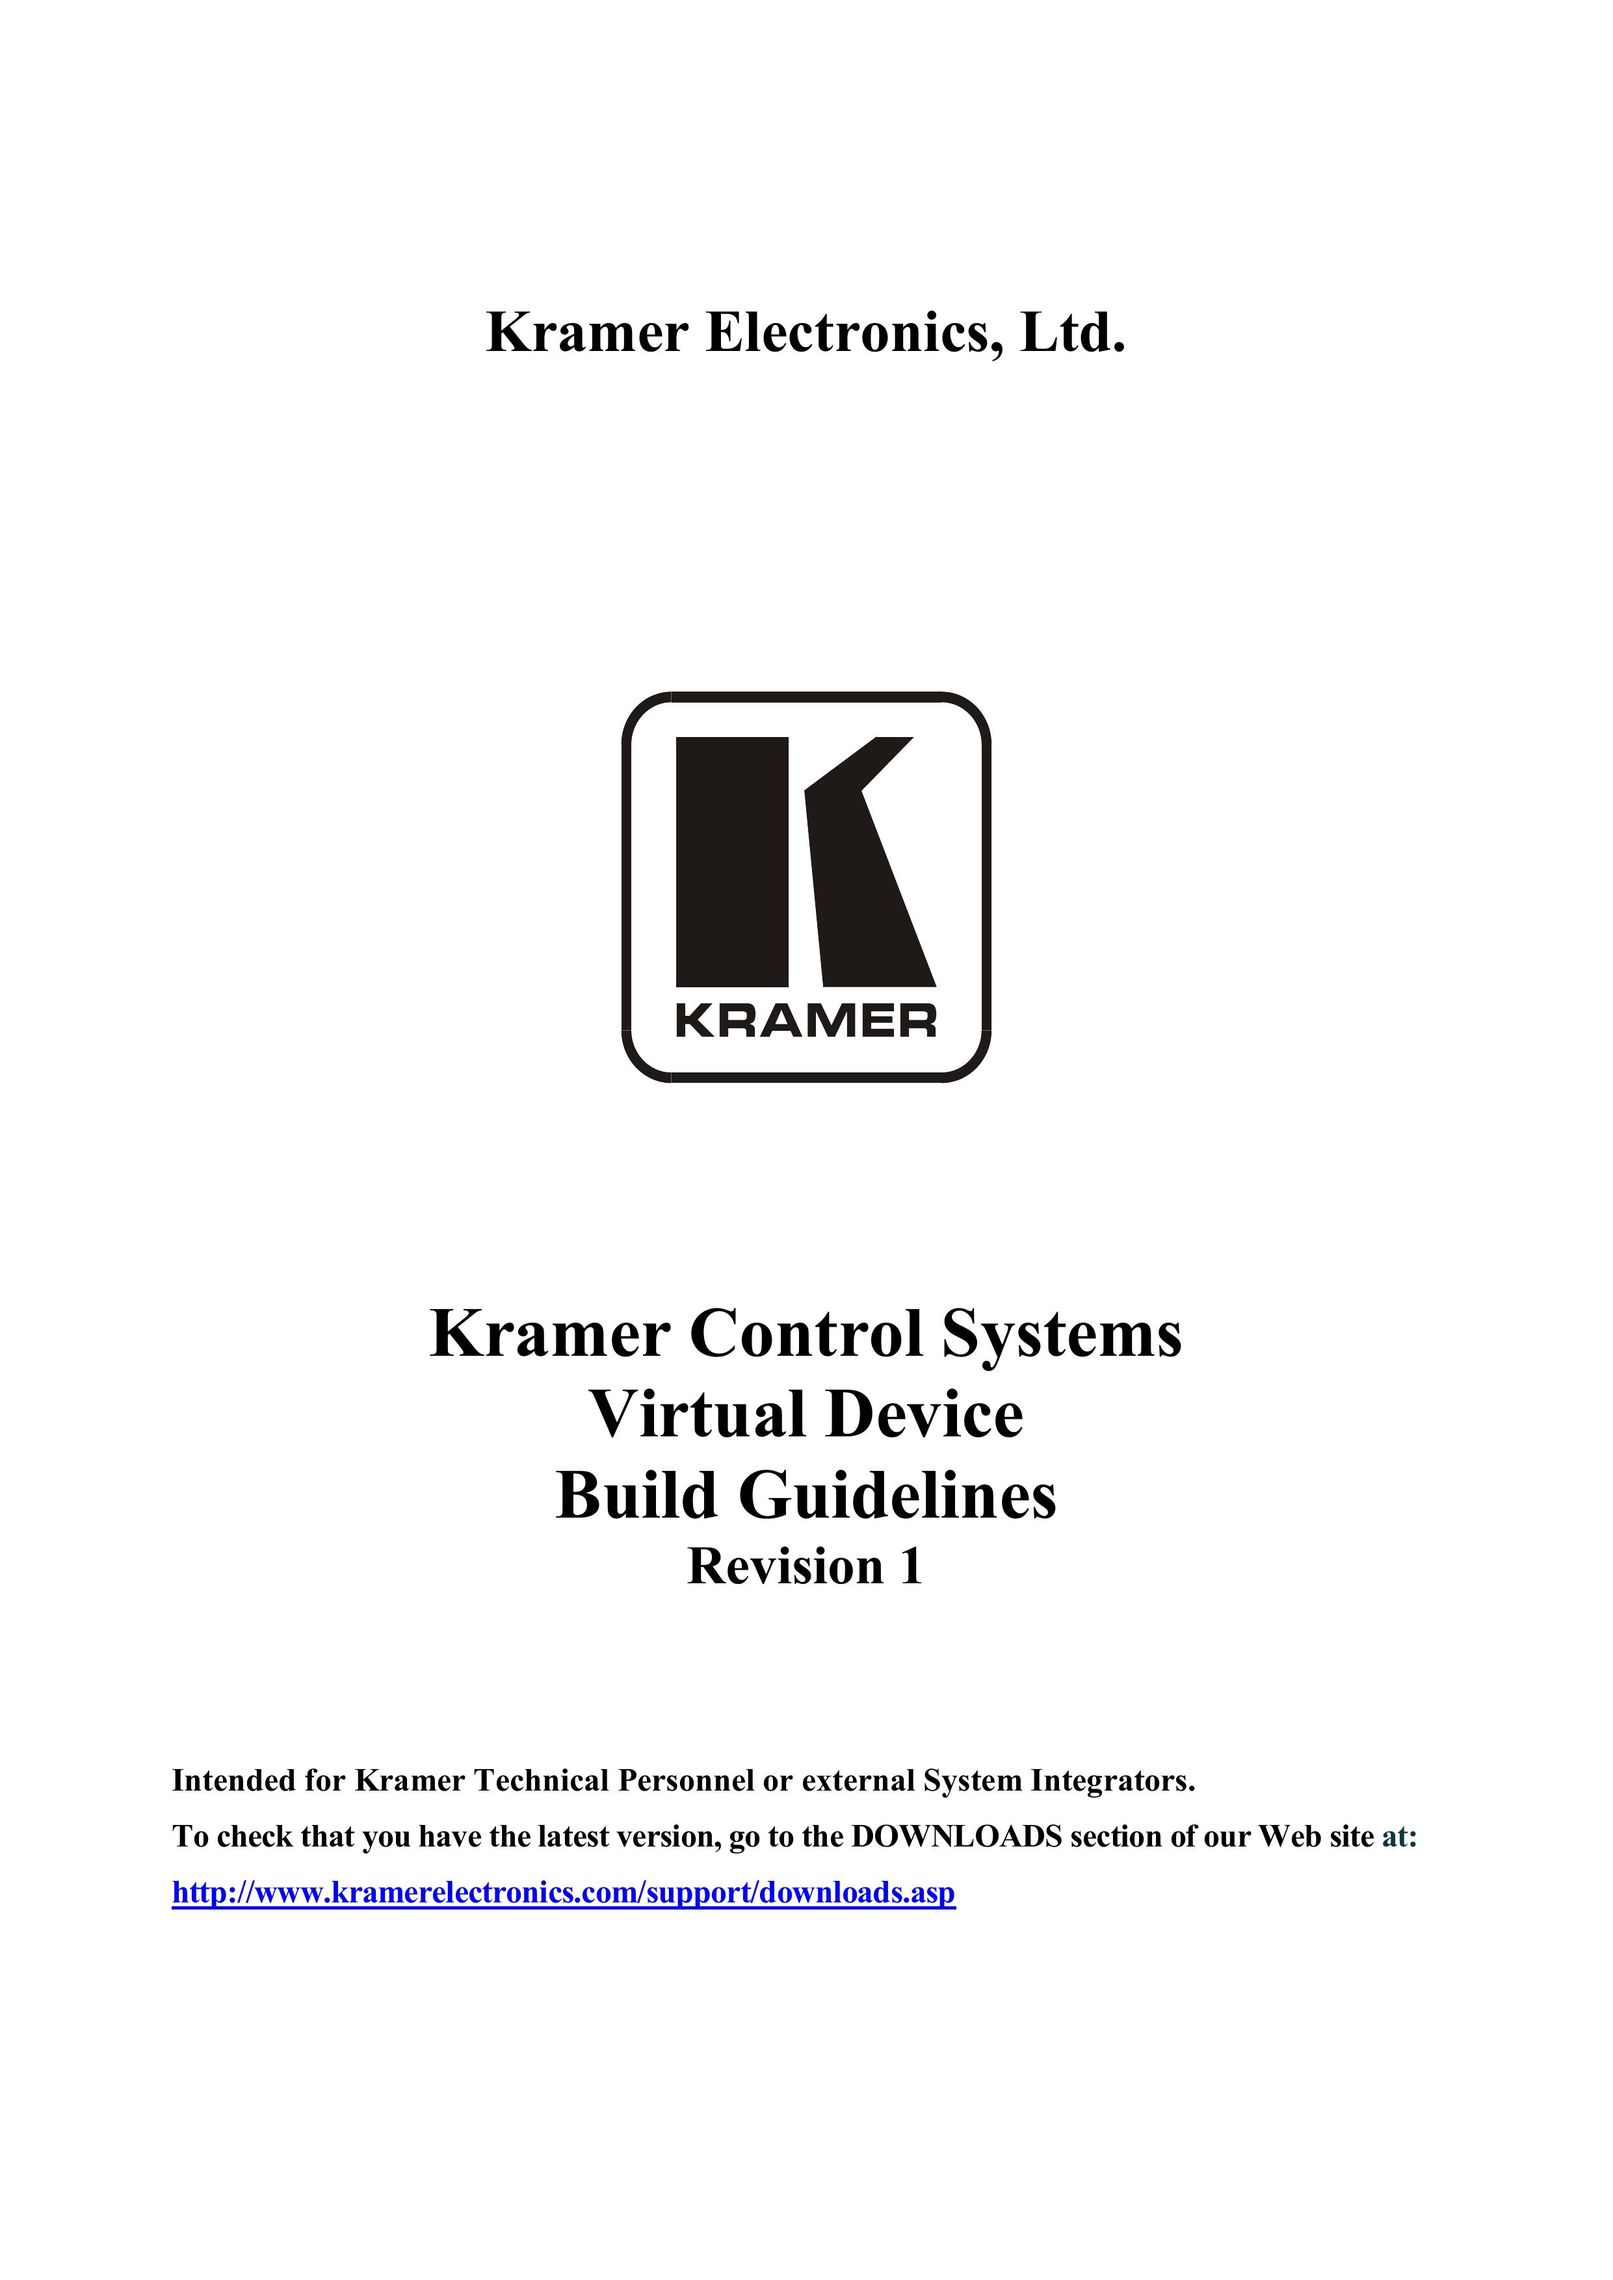 Kramer Electronics revision1 Network Router User Manual